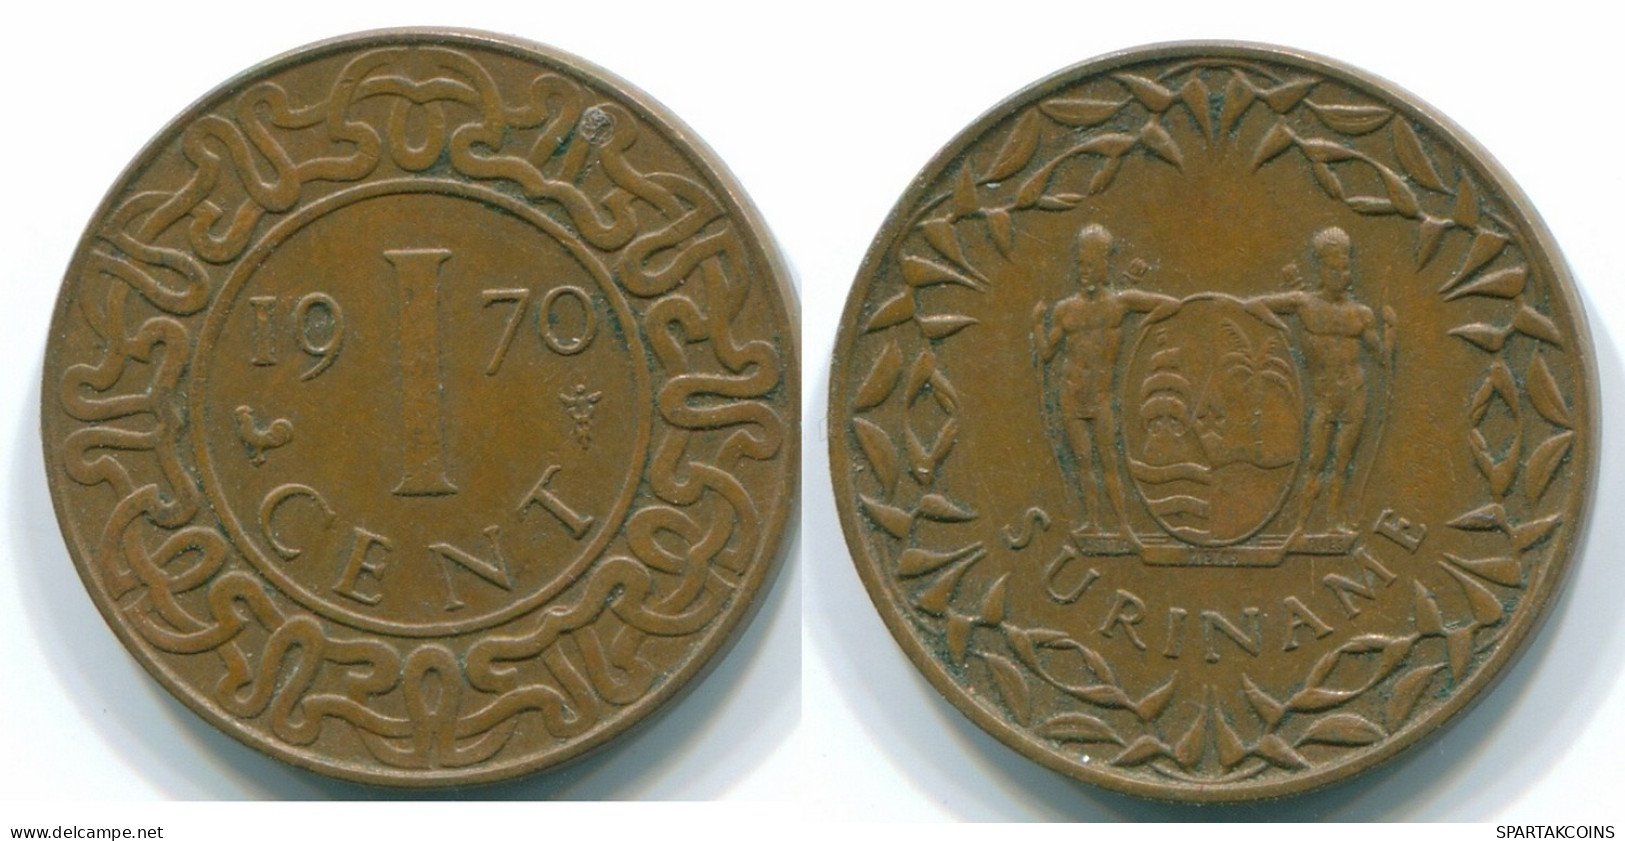 1 CENT 1970 SURINAME Netherlands Bronze Cock Colonial Coin #S10984.U.A - Surinam 1975 - ...